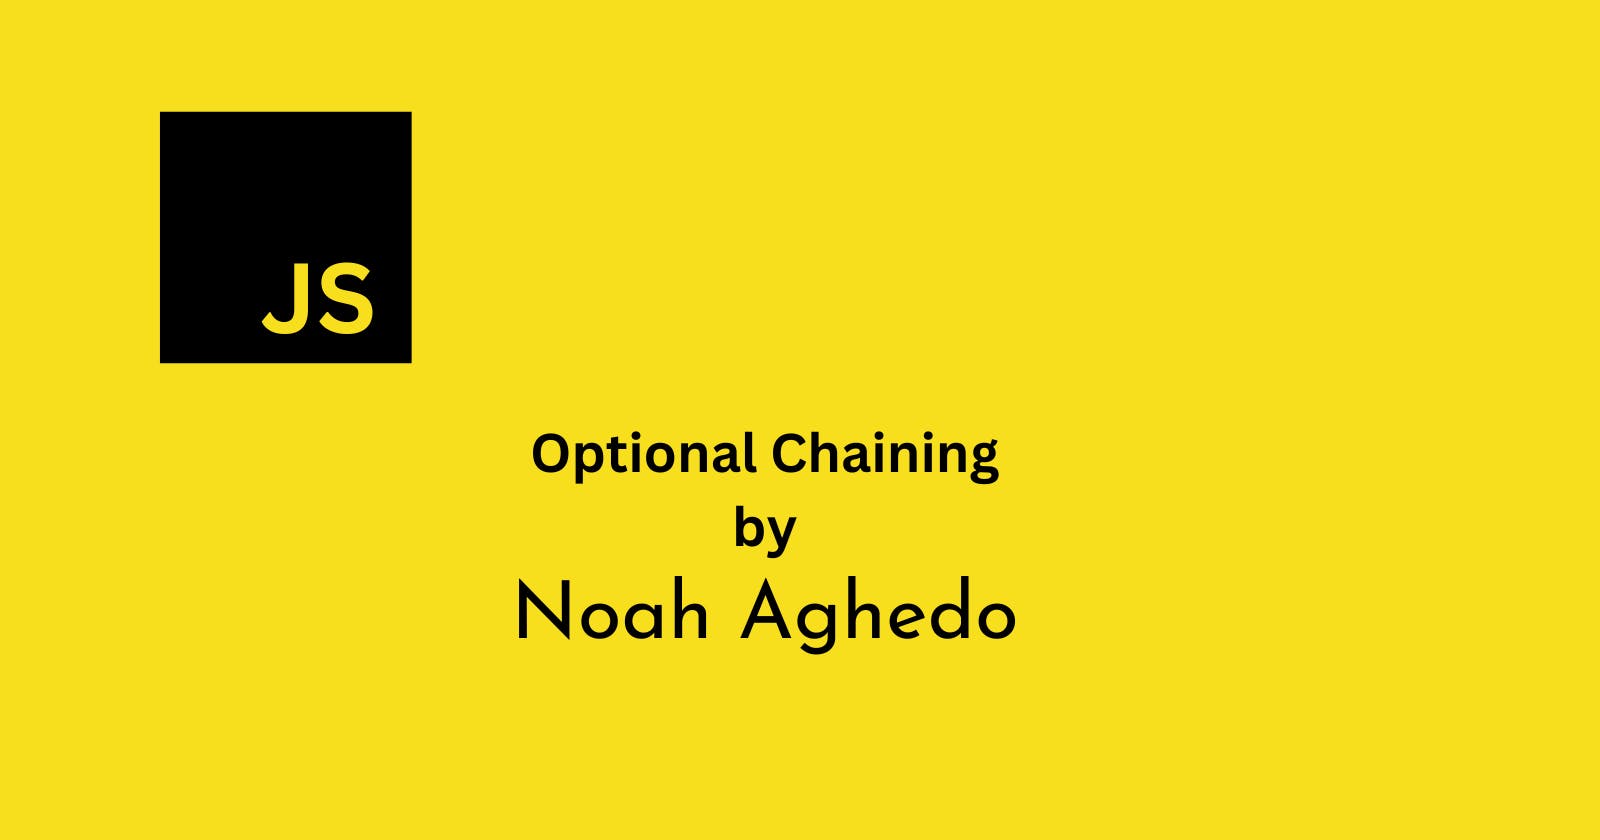 Breaking optional chaining in JavaScript down